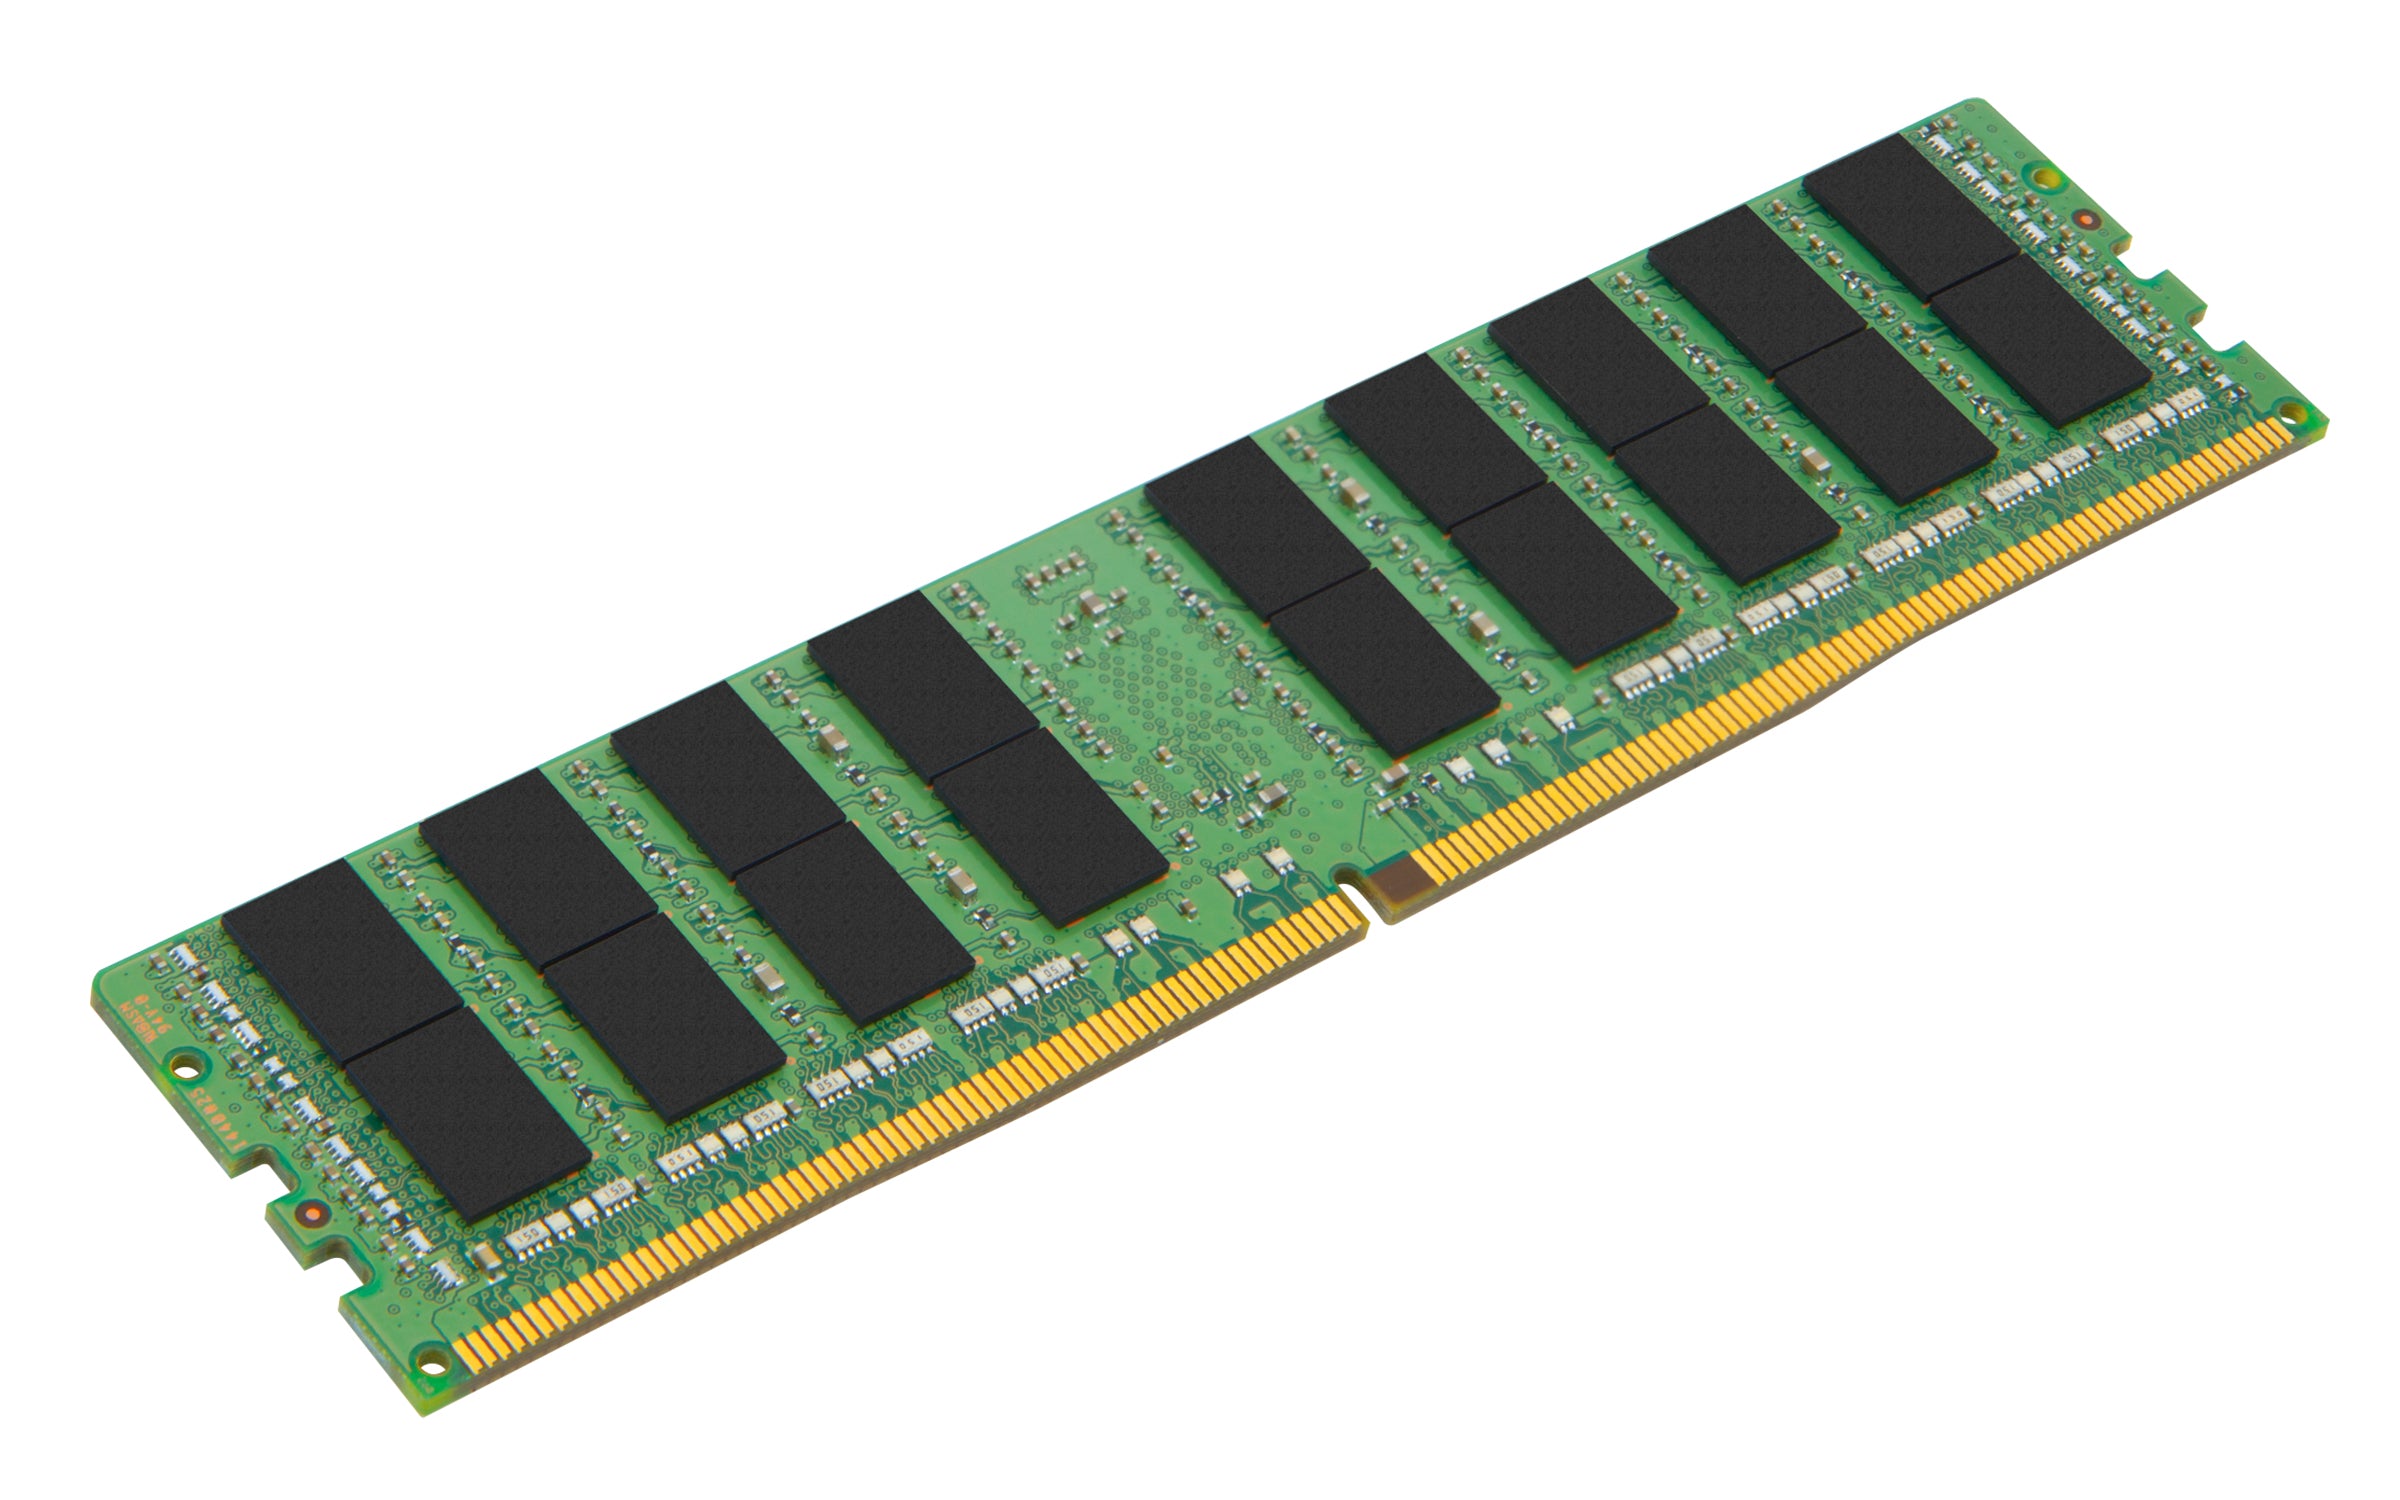 KSM29RD4/64HAR - Memória de 64GB RDIMM DDR4 2933Mhz 1,2V 2Rx4 com chip